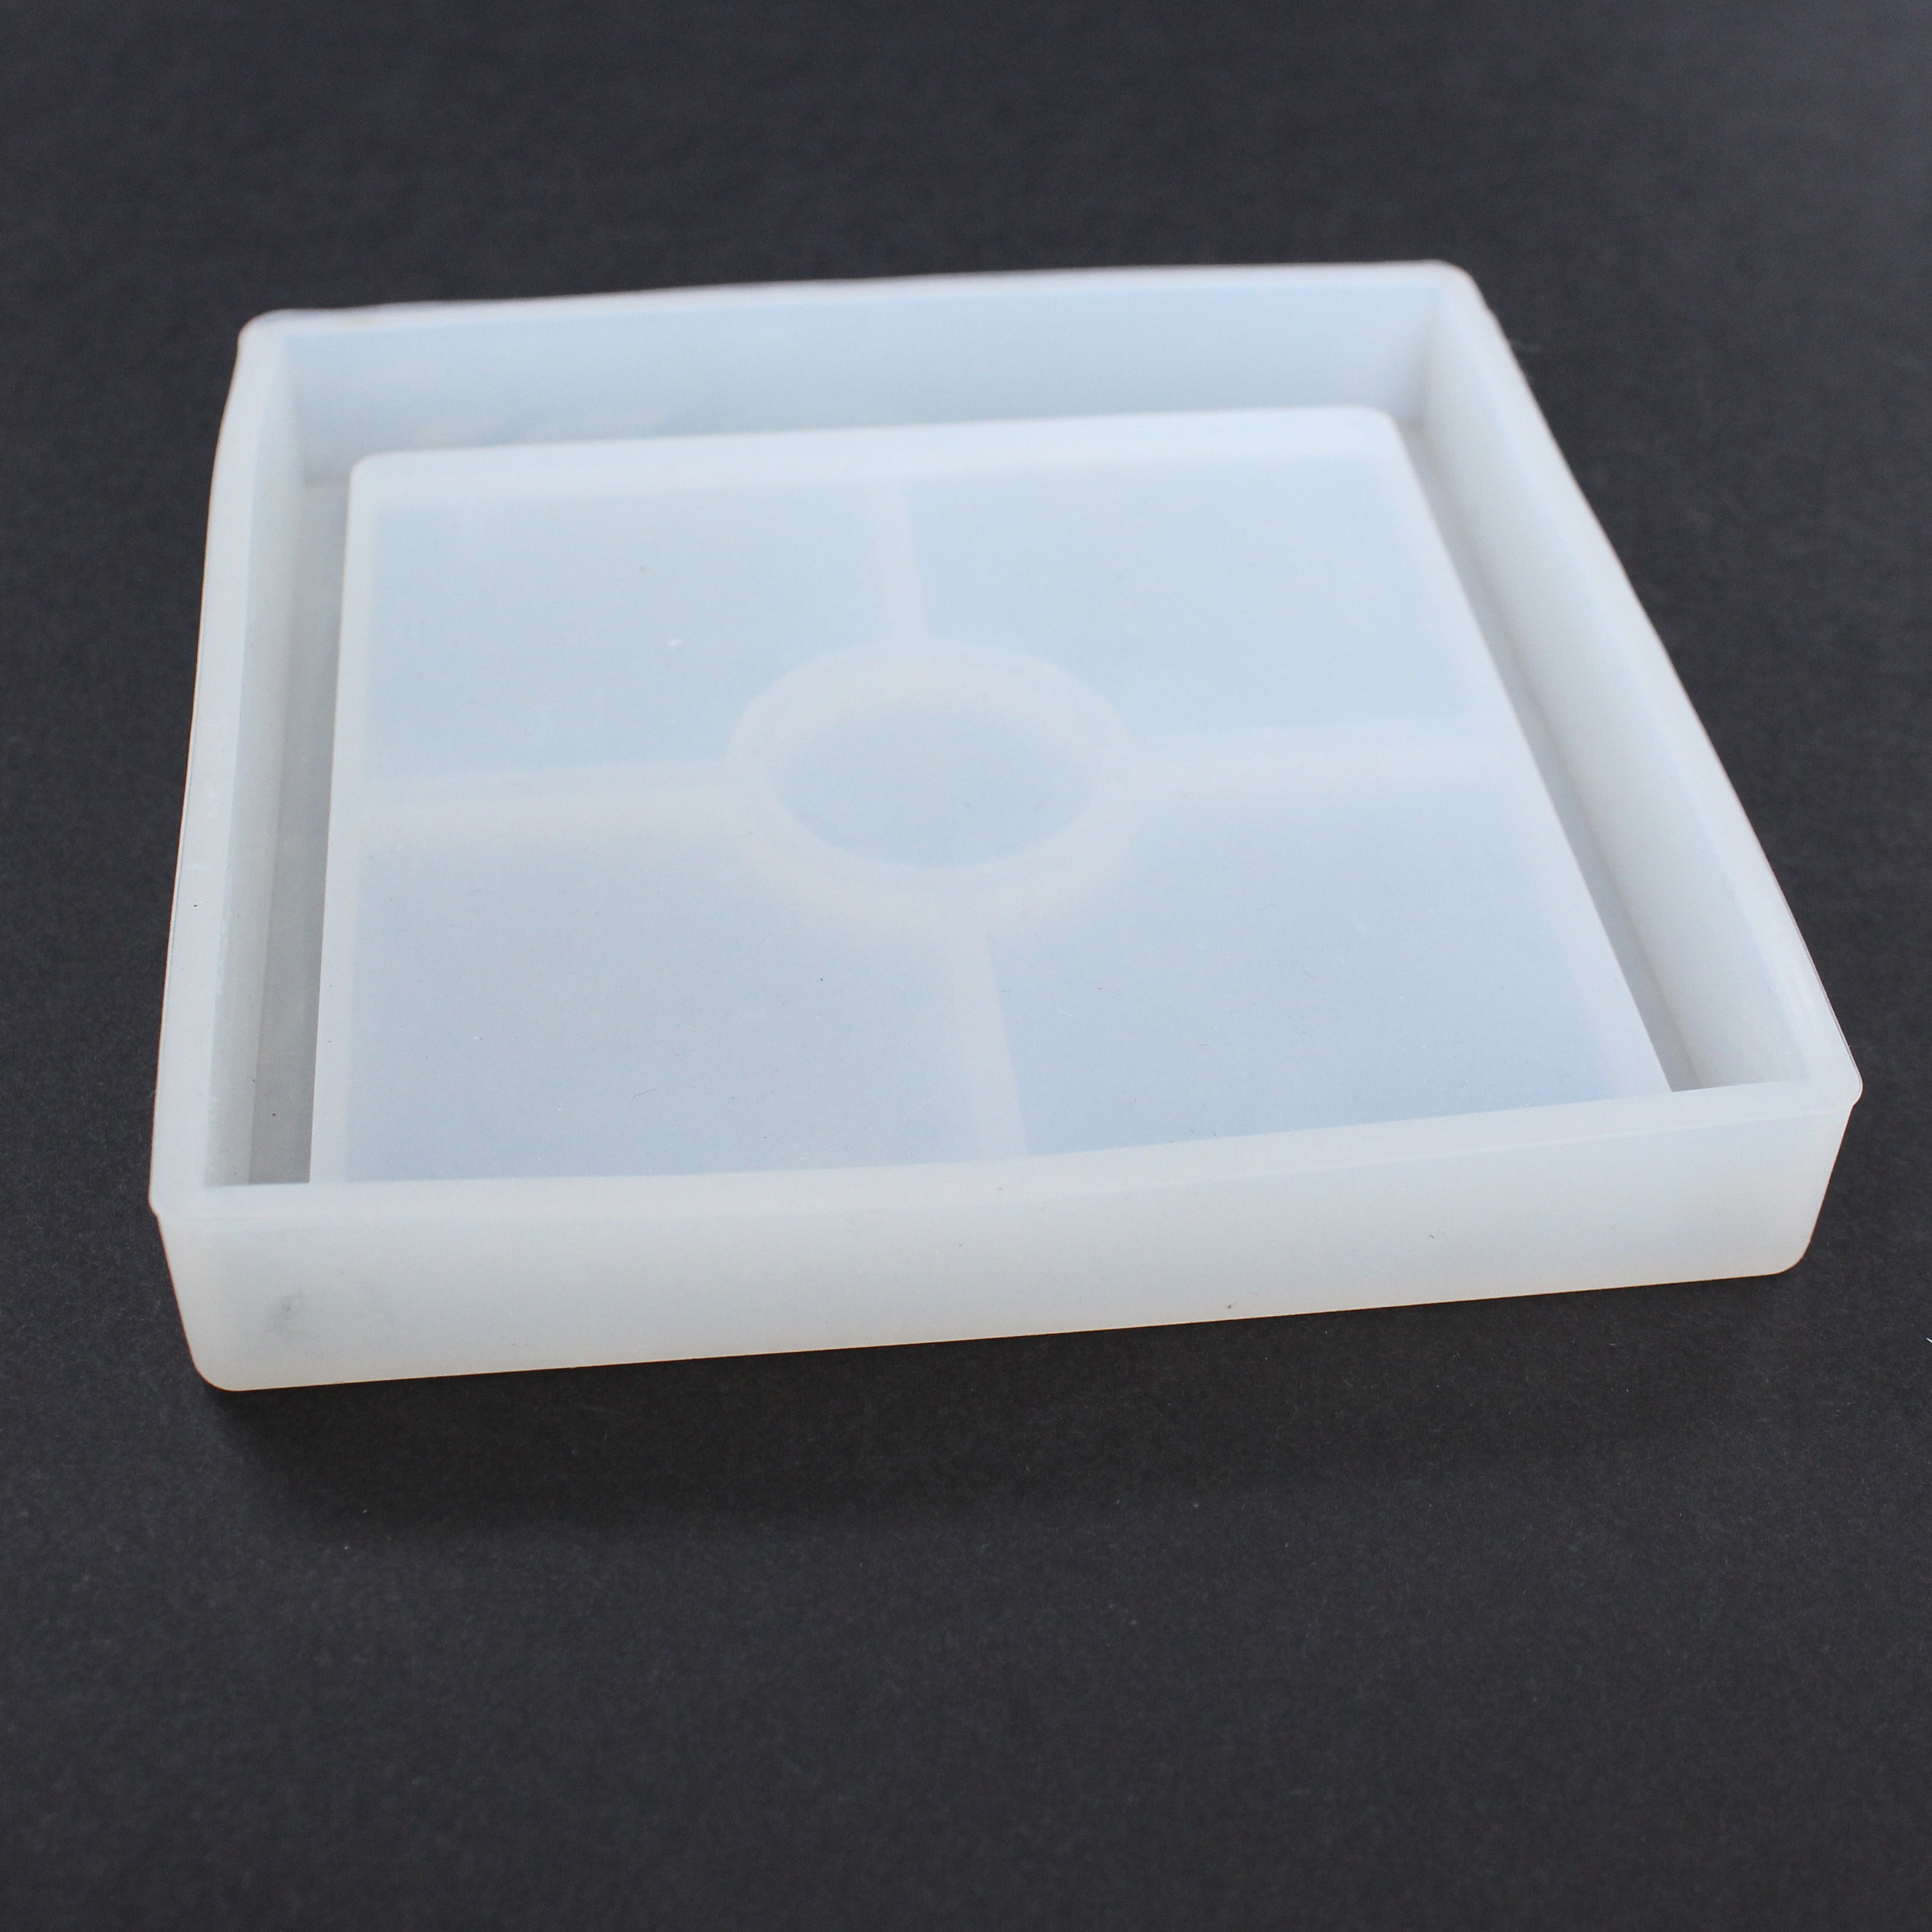 10cm/4 Large Cube Silicone Mold Square Epoxy Resin Casting